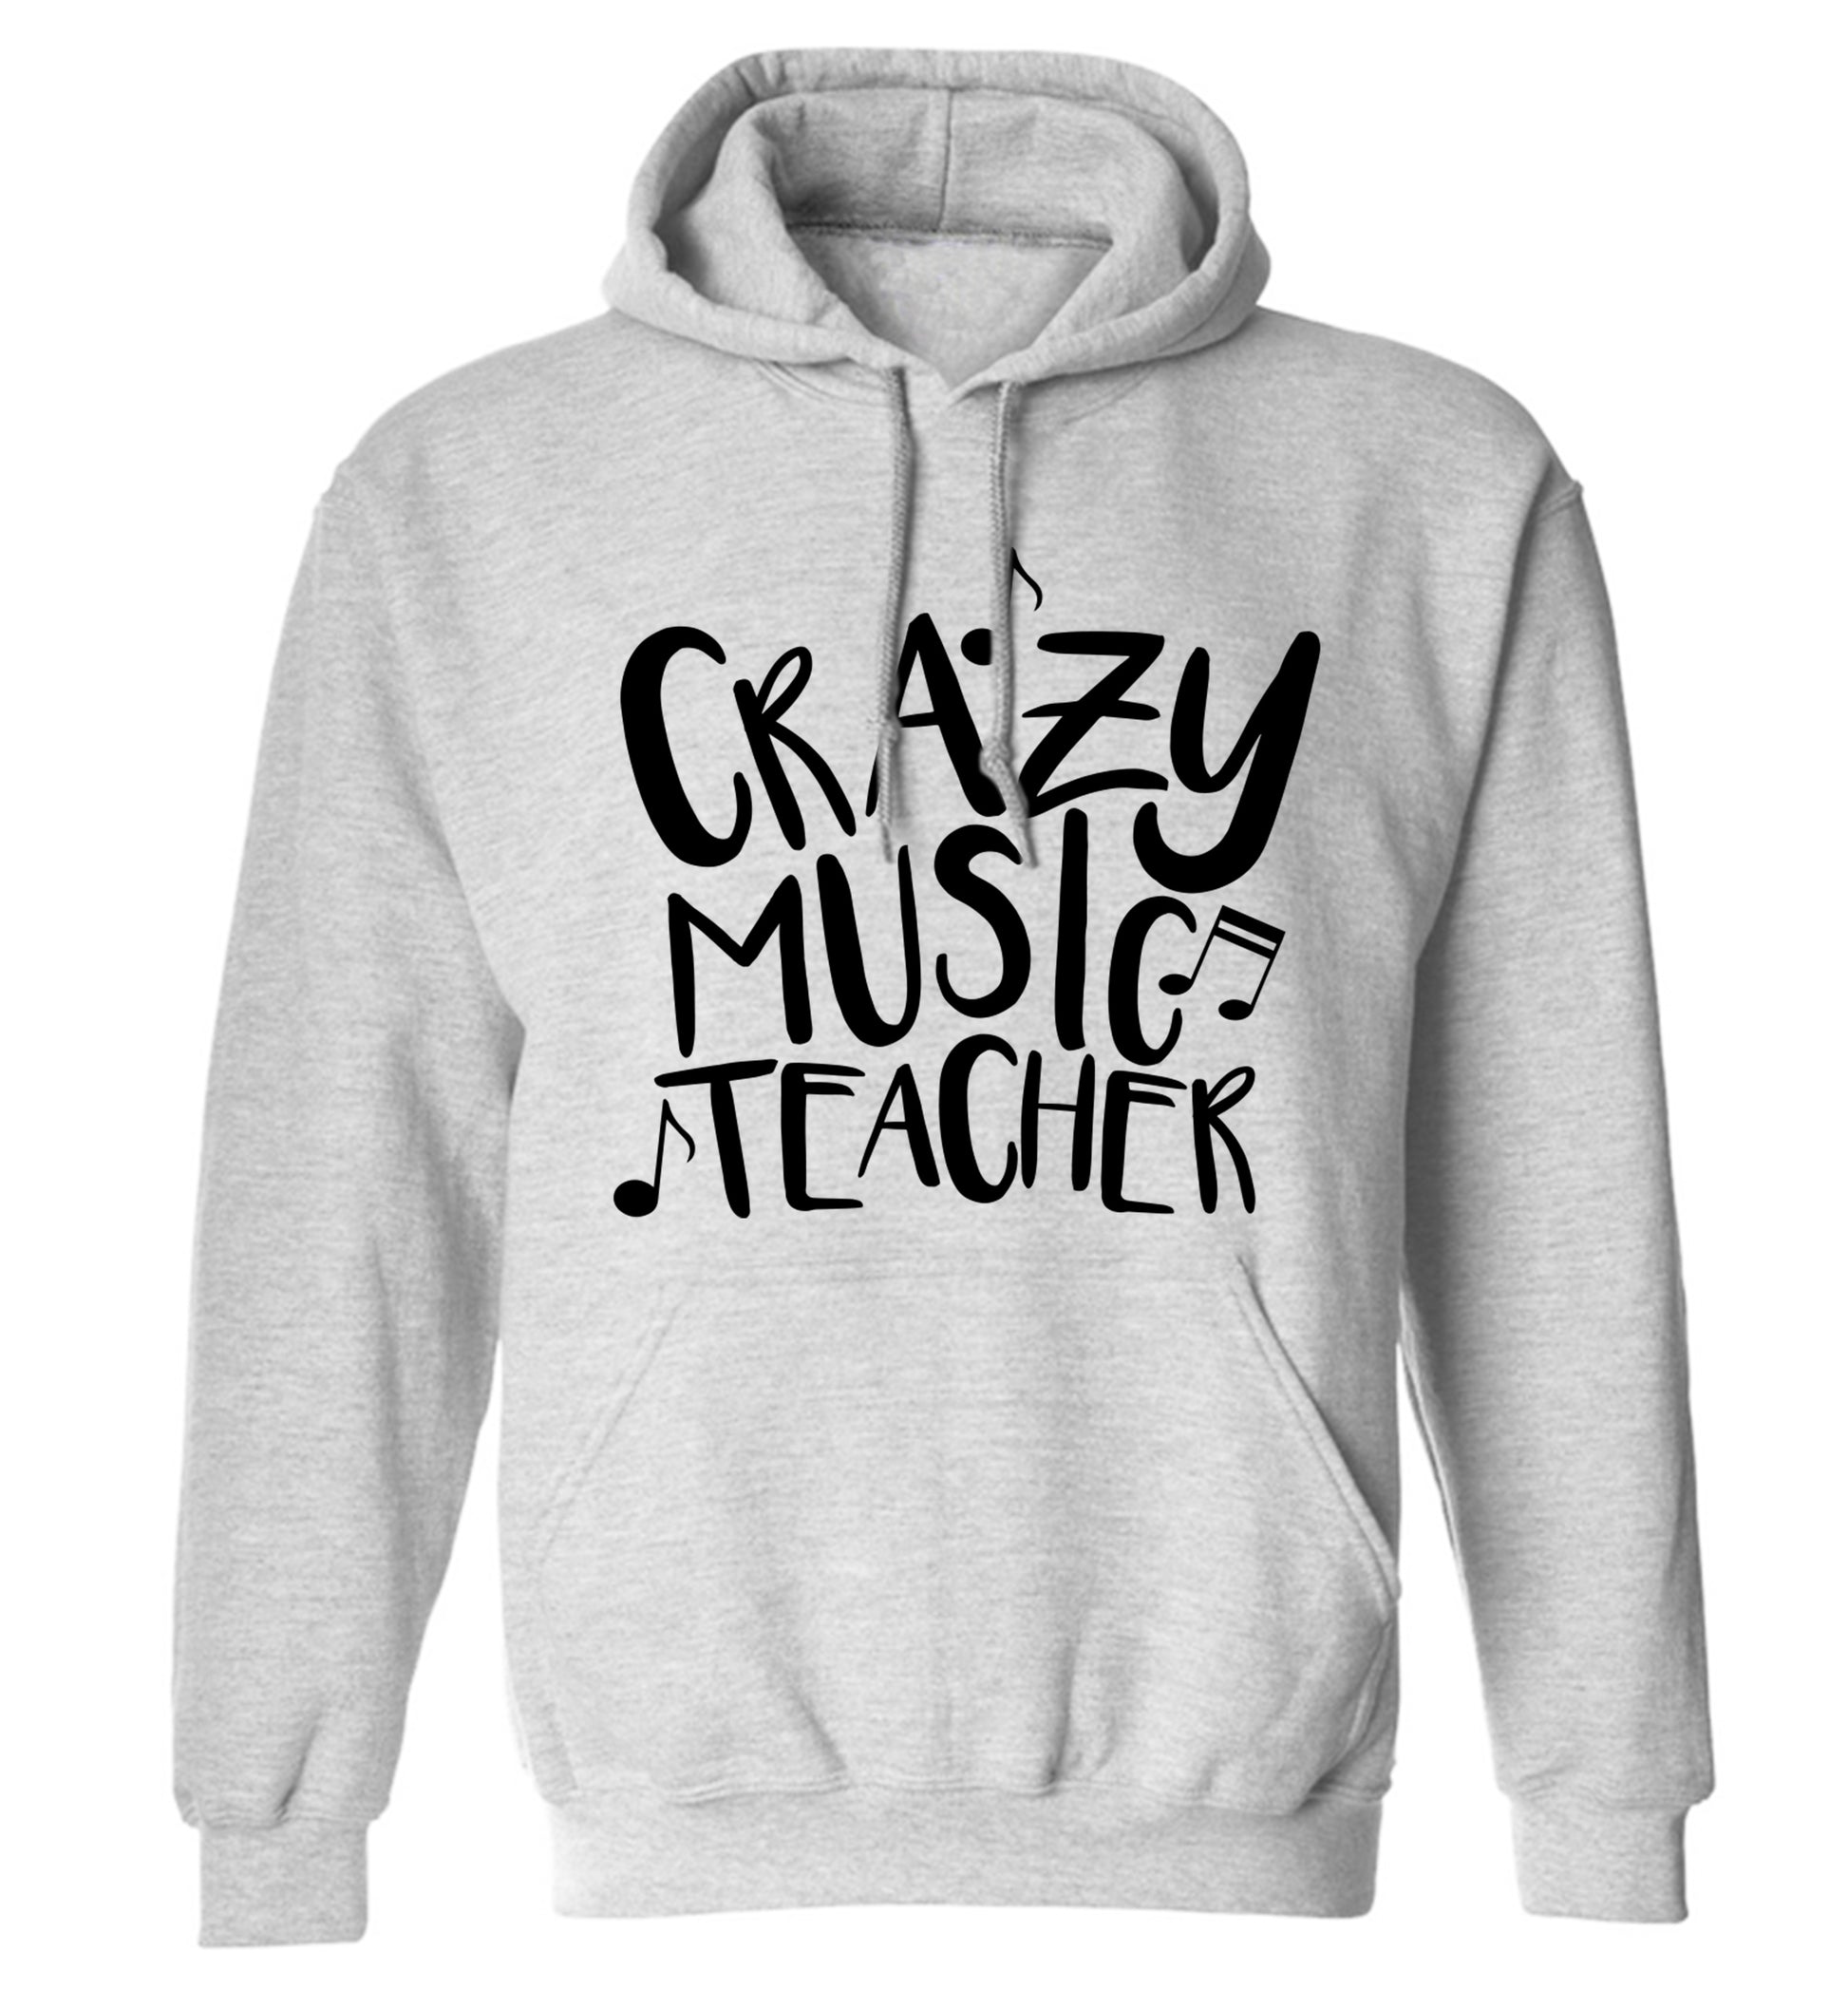 Crazy music teacher adults unisex grey hoodie 2XL